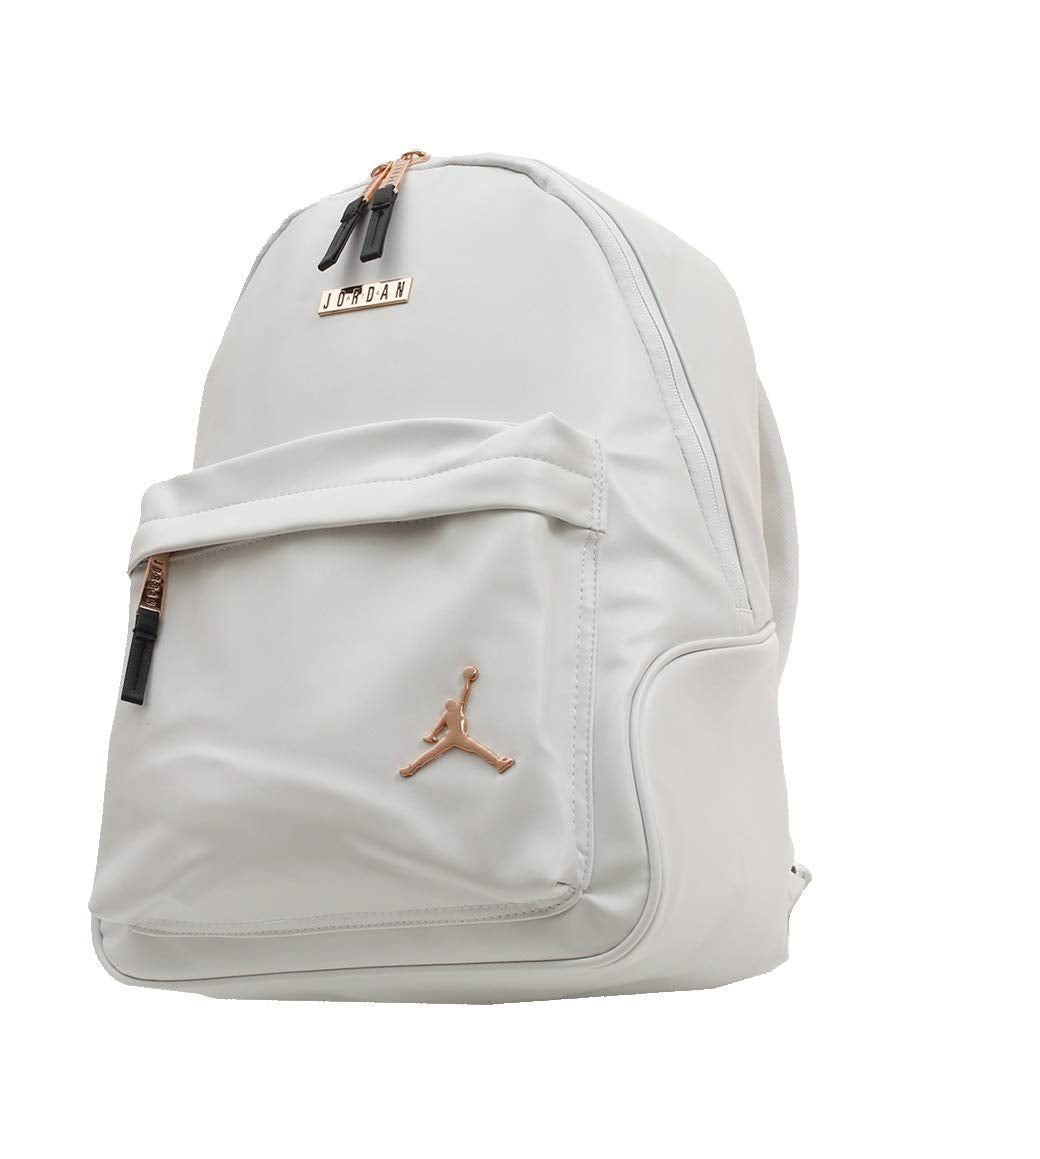 Nike Air Jordan Regal Air Backpack (One Size, White)–